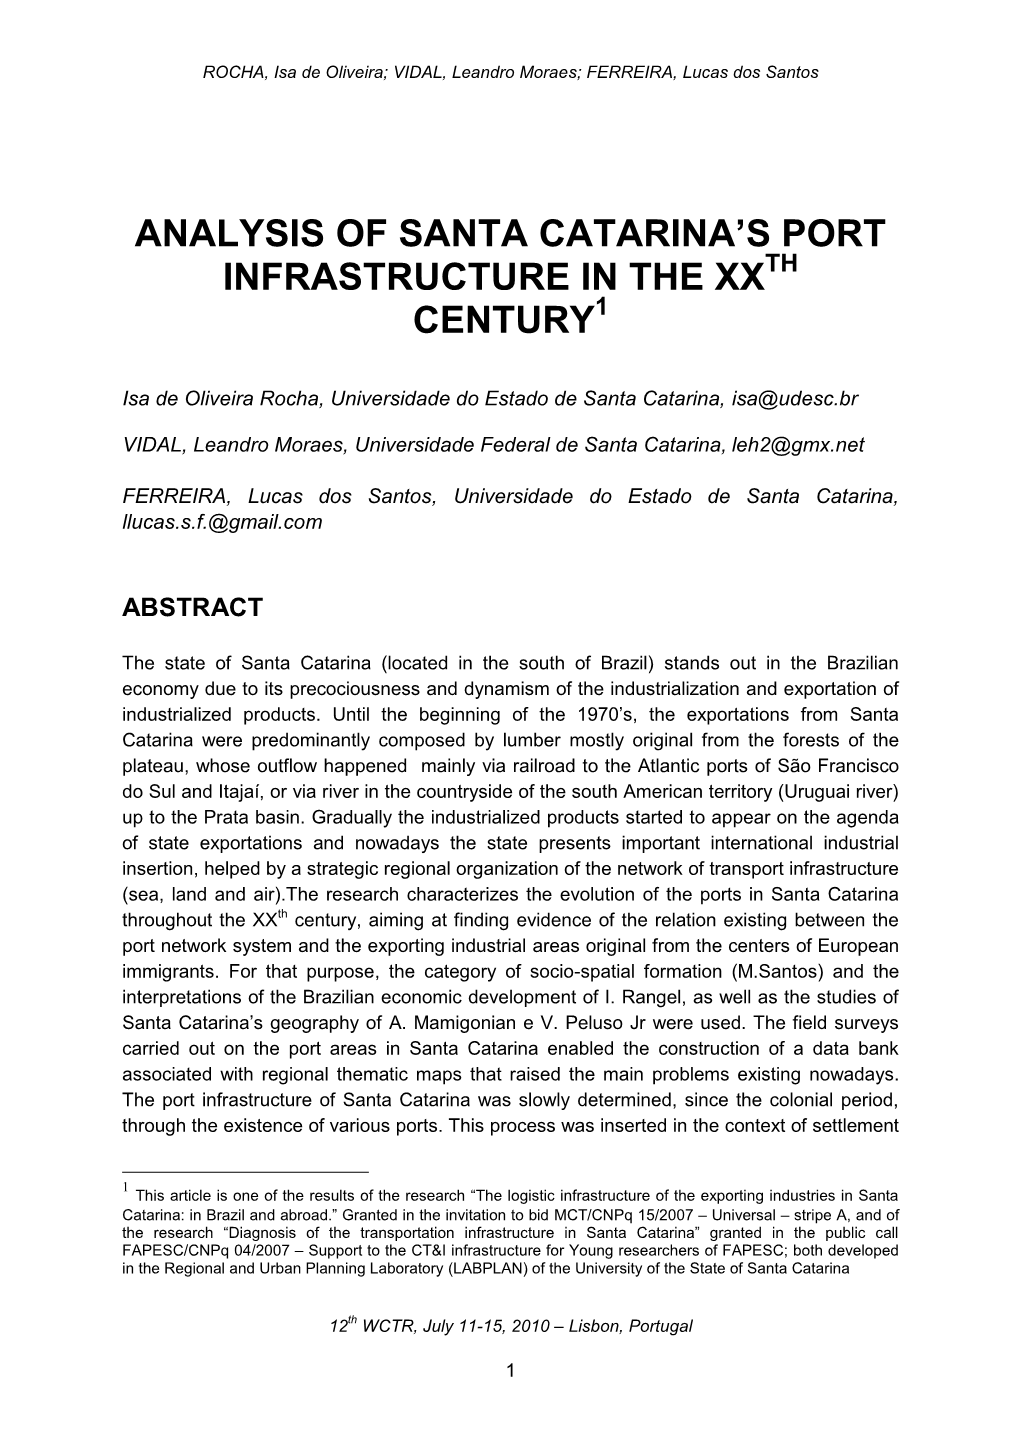 Analysis of Santa Catarina's Port Infrastructure in the Xx